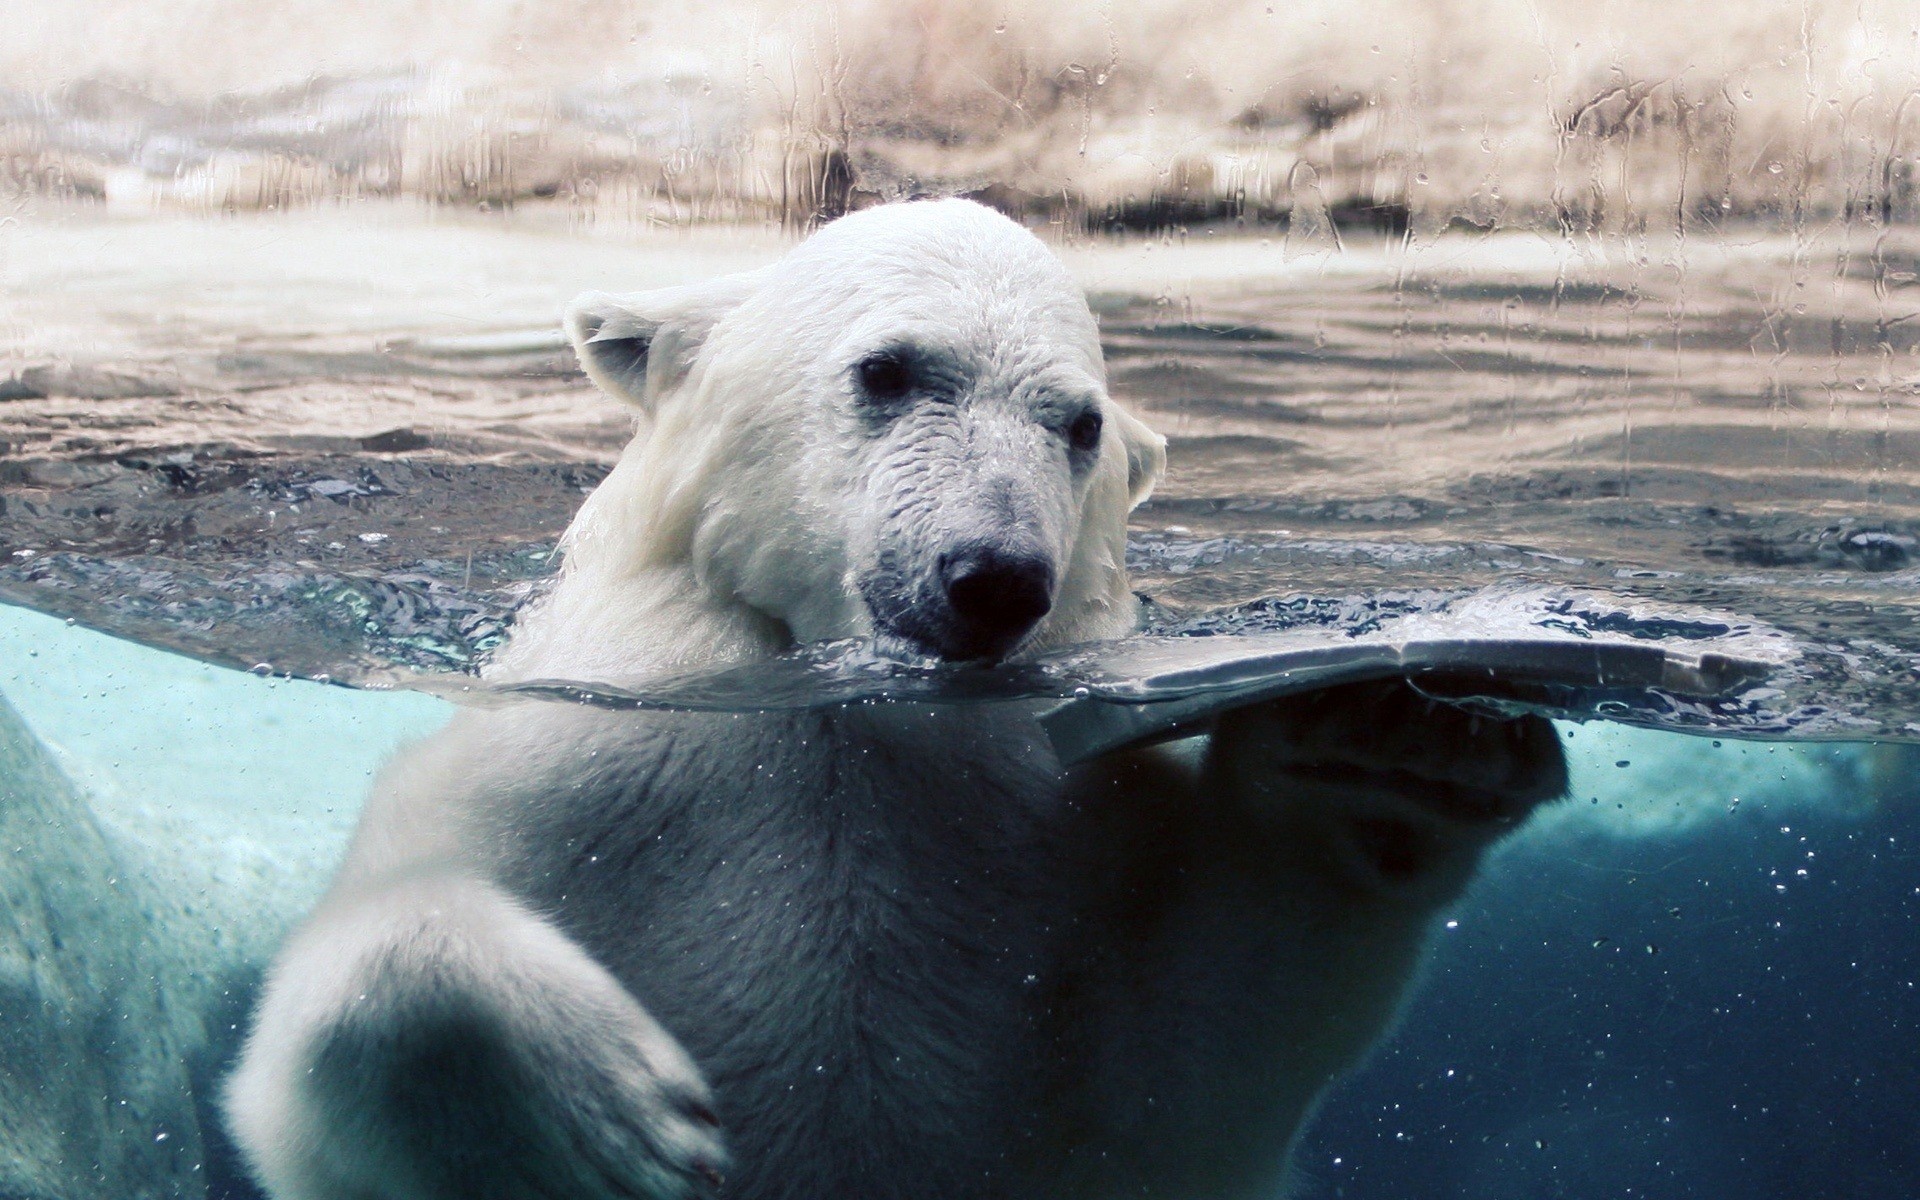 animals water mammal wildlife frosty nature outdoors winter animal snow polar ocean wild cold polar bear